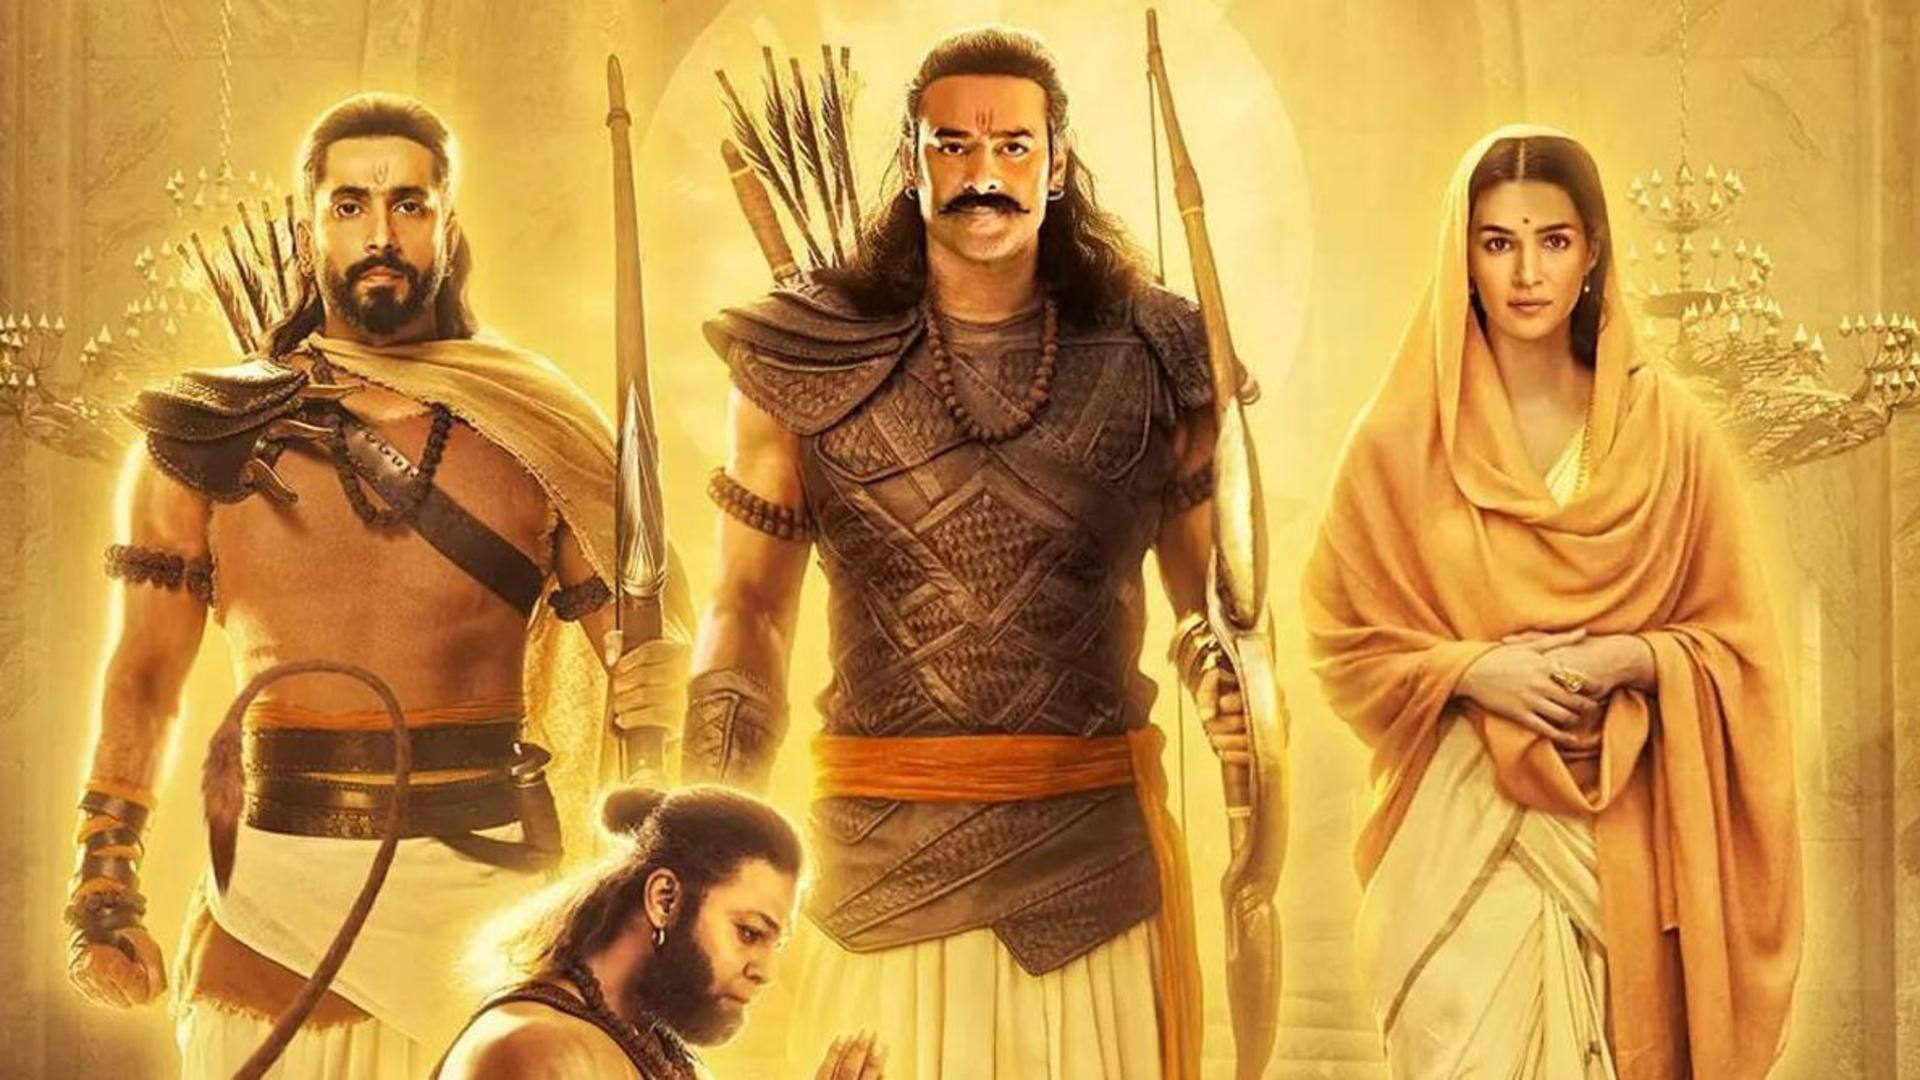 'Adipurush' trailer out! Prabhas-Kriti Sanon-Saif Ali Khan starrer looks majestic